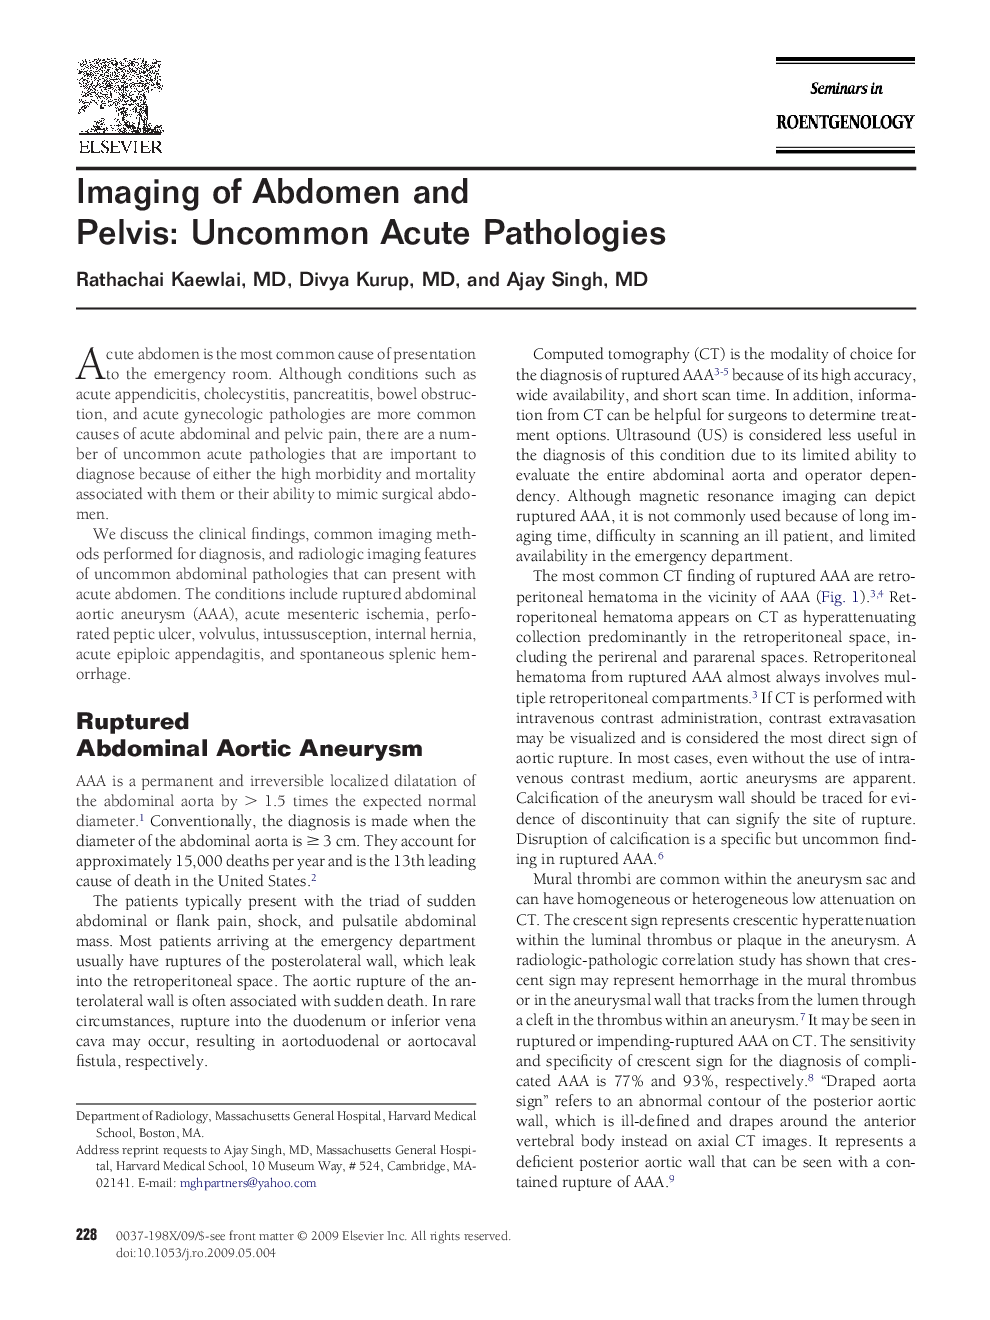 Imaging of Abdomen and Pelvis: Uncommon Acute Pathologies